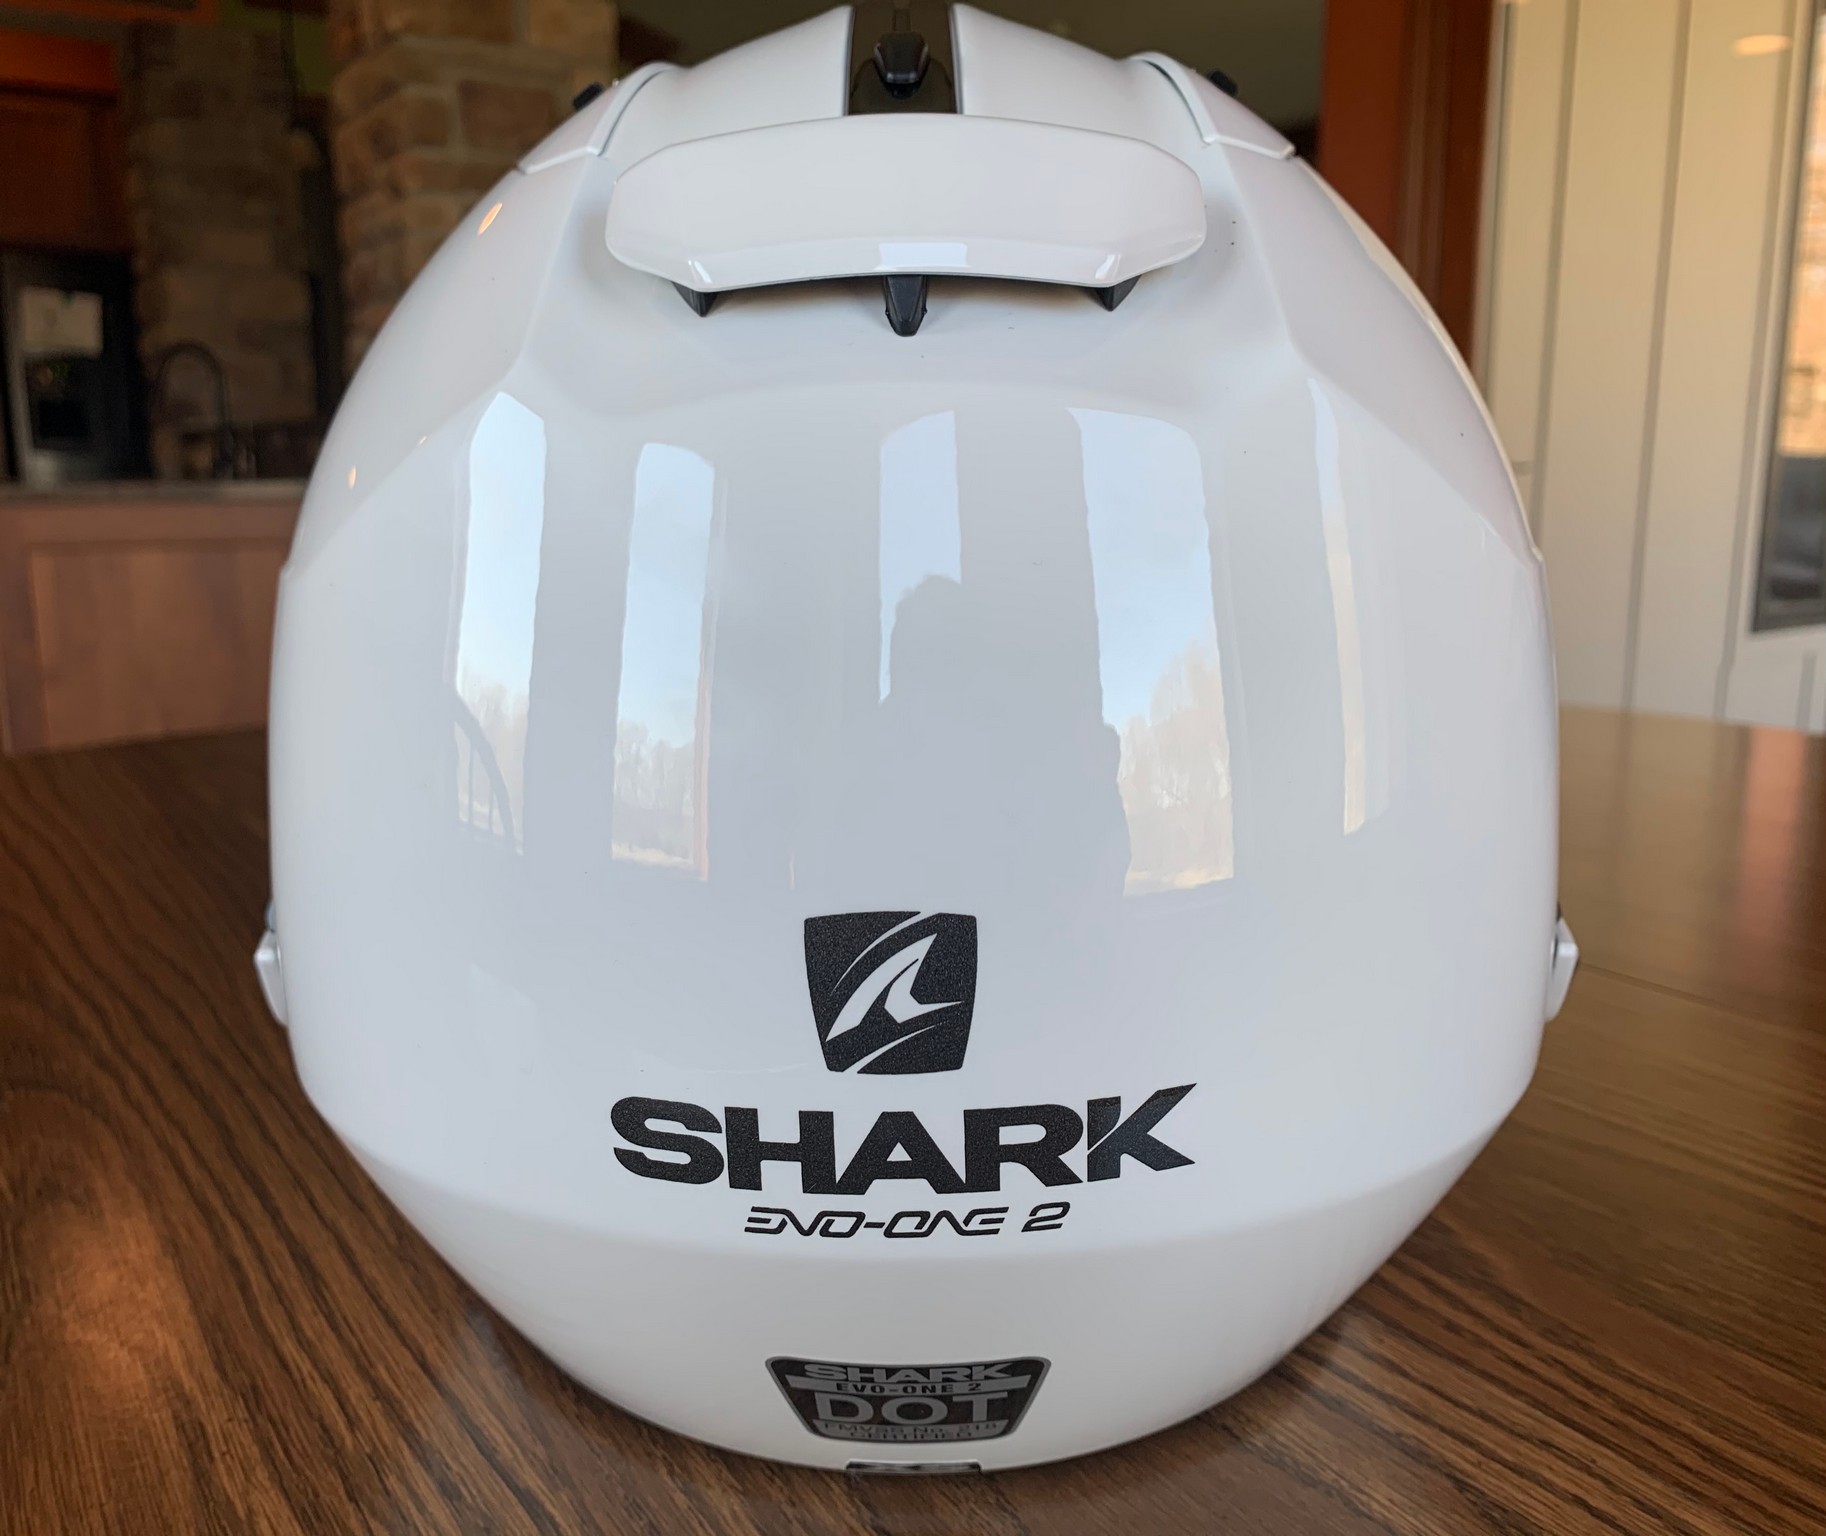 SHARK Helmets EVO-ONE 2 Casco modular en blanco